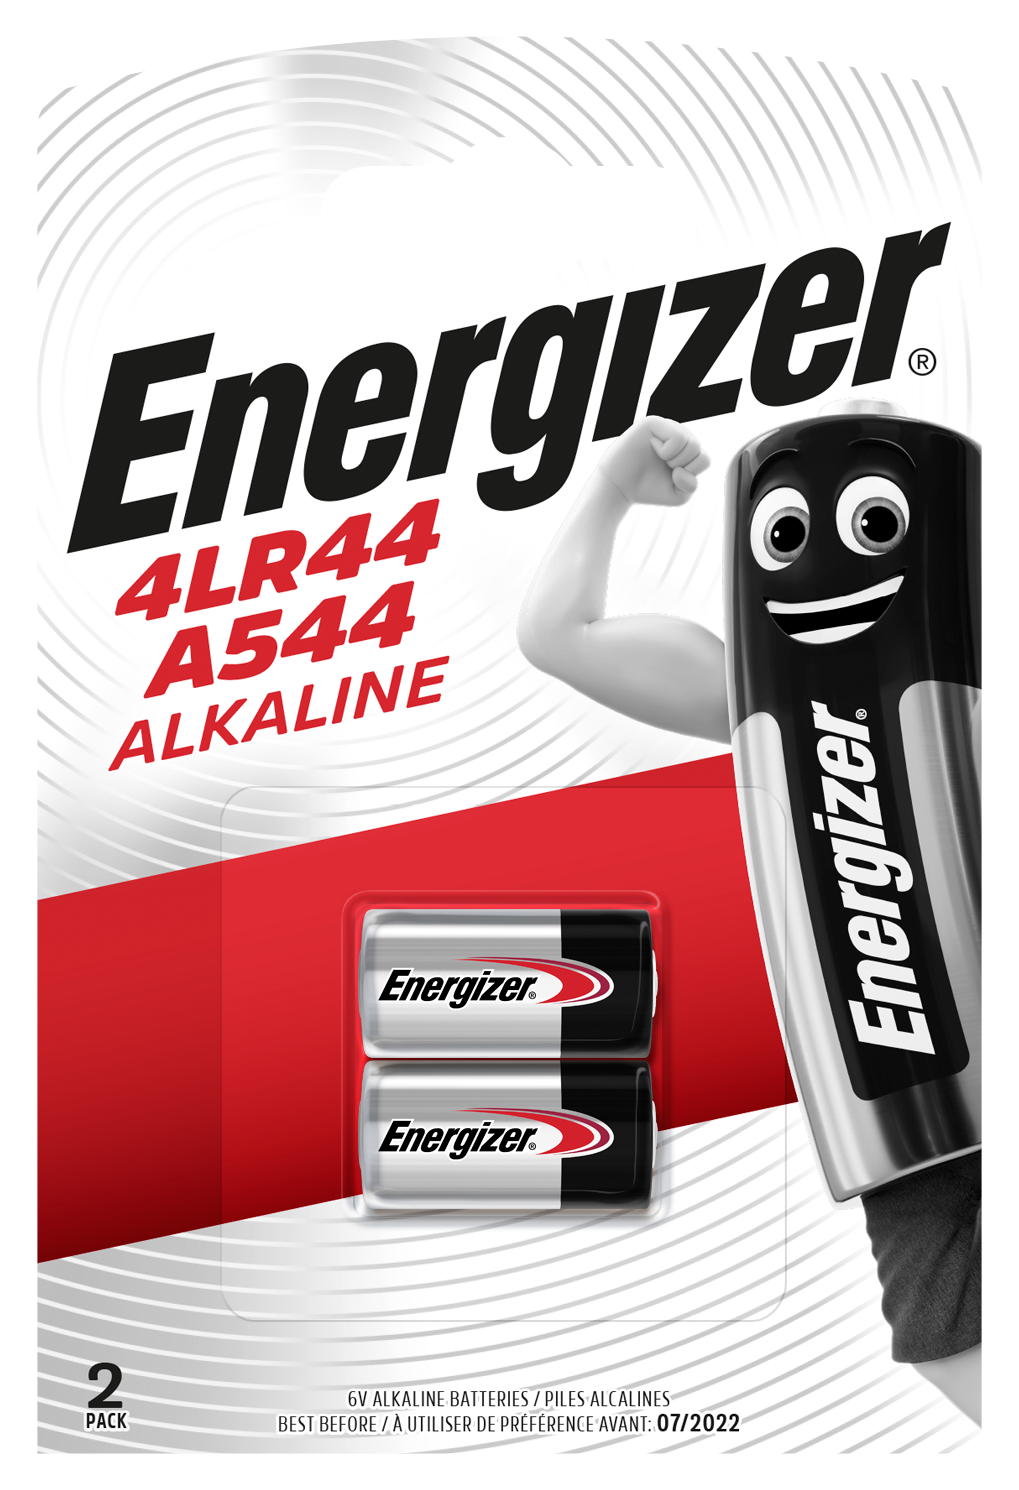 ENERGIZER BATTERIEN ALKALINE 4LR44/A544 6V 2 STÜCK